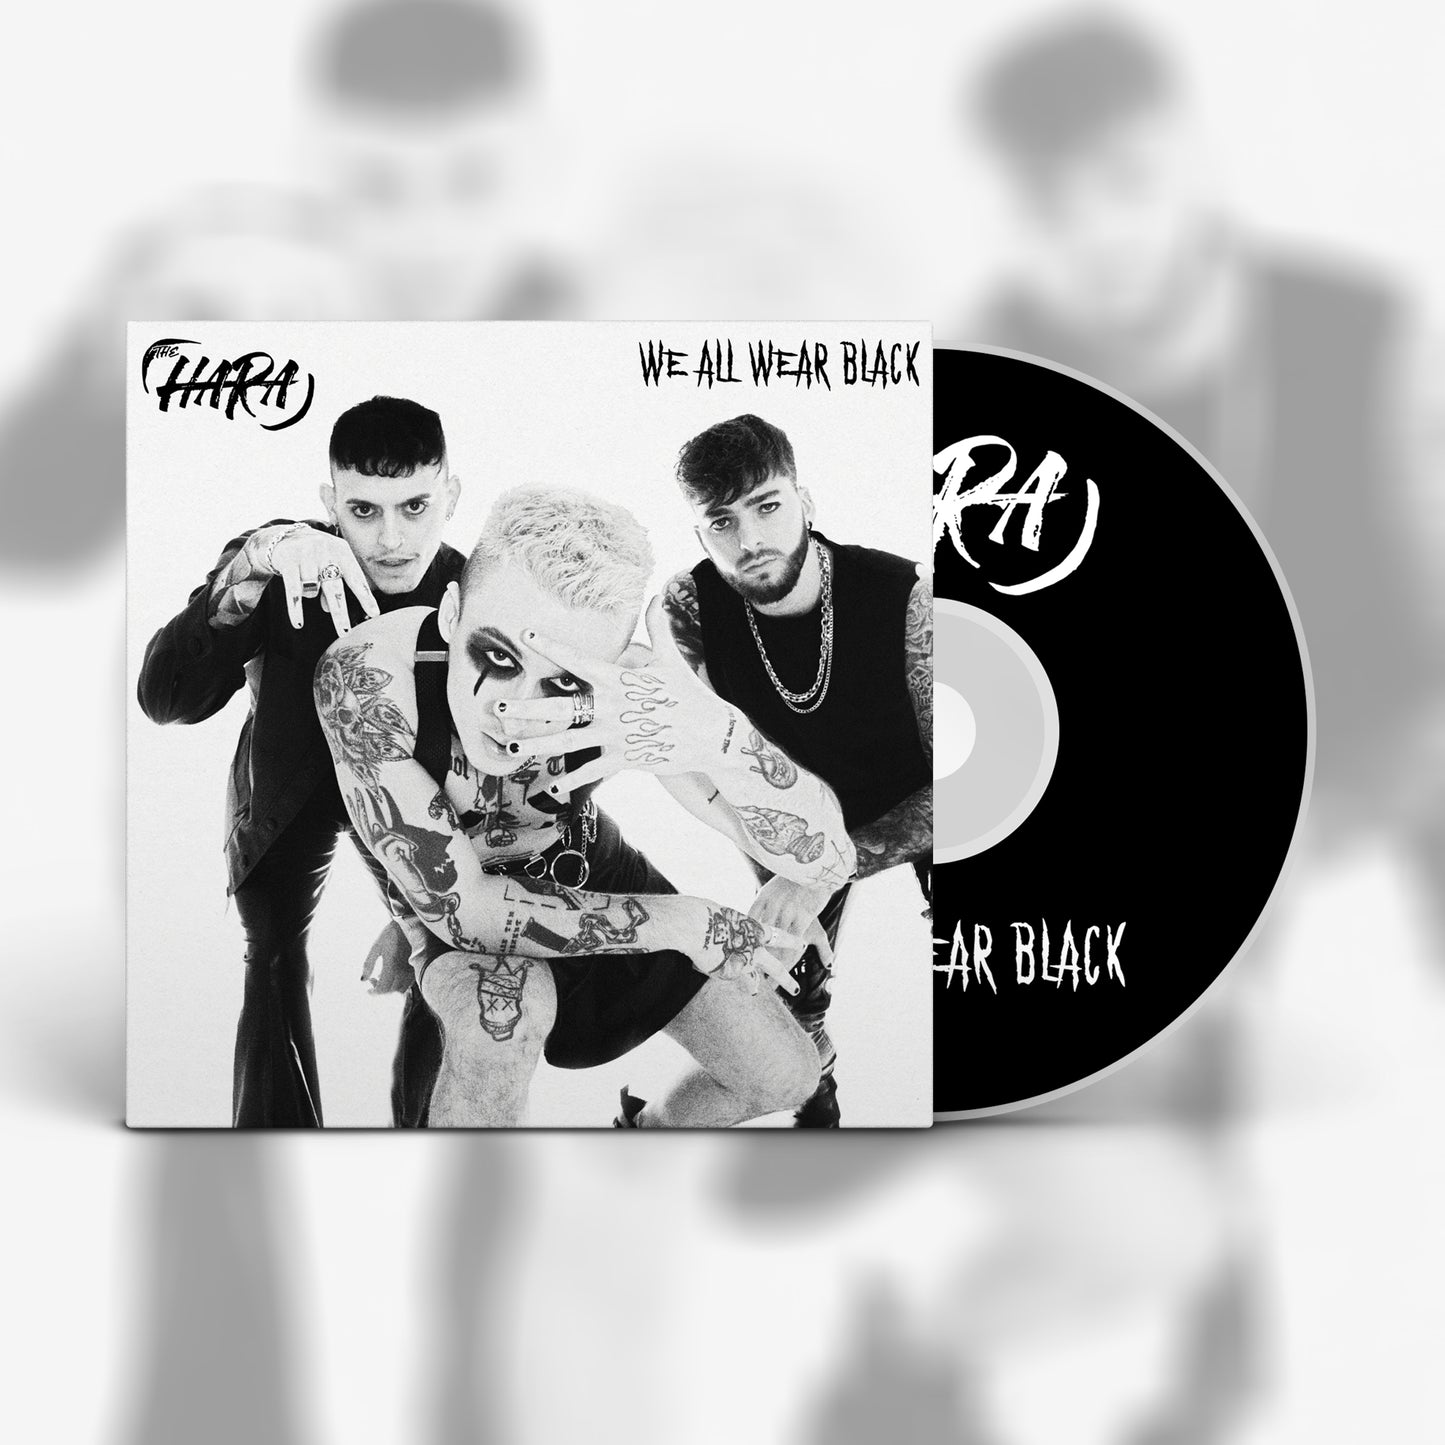 THE HARA - 'We All Wear Black' EP - CD